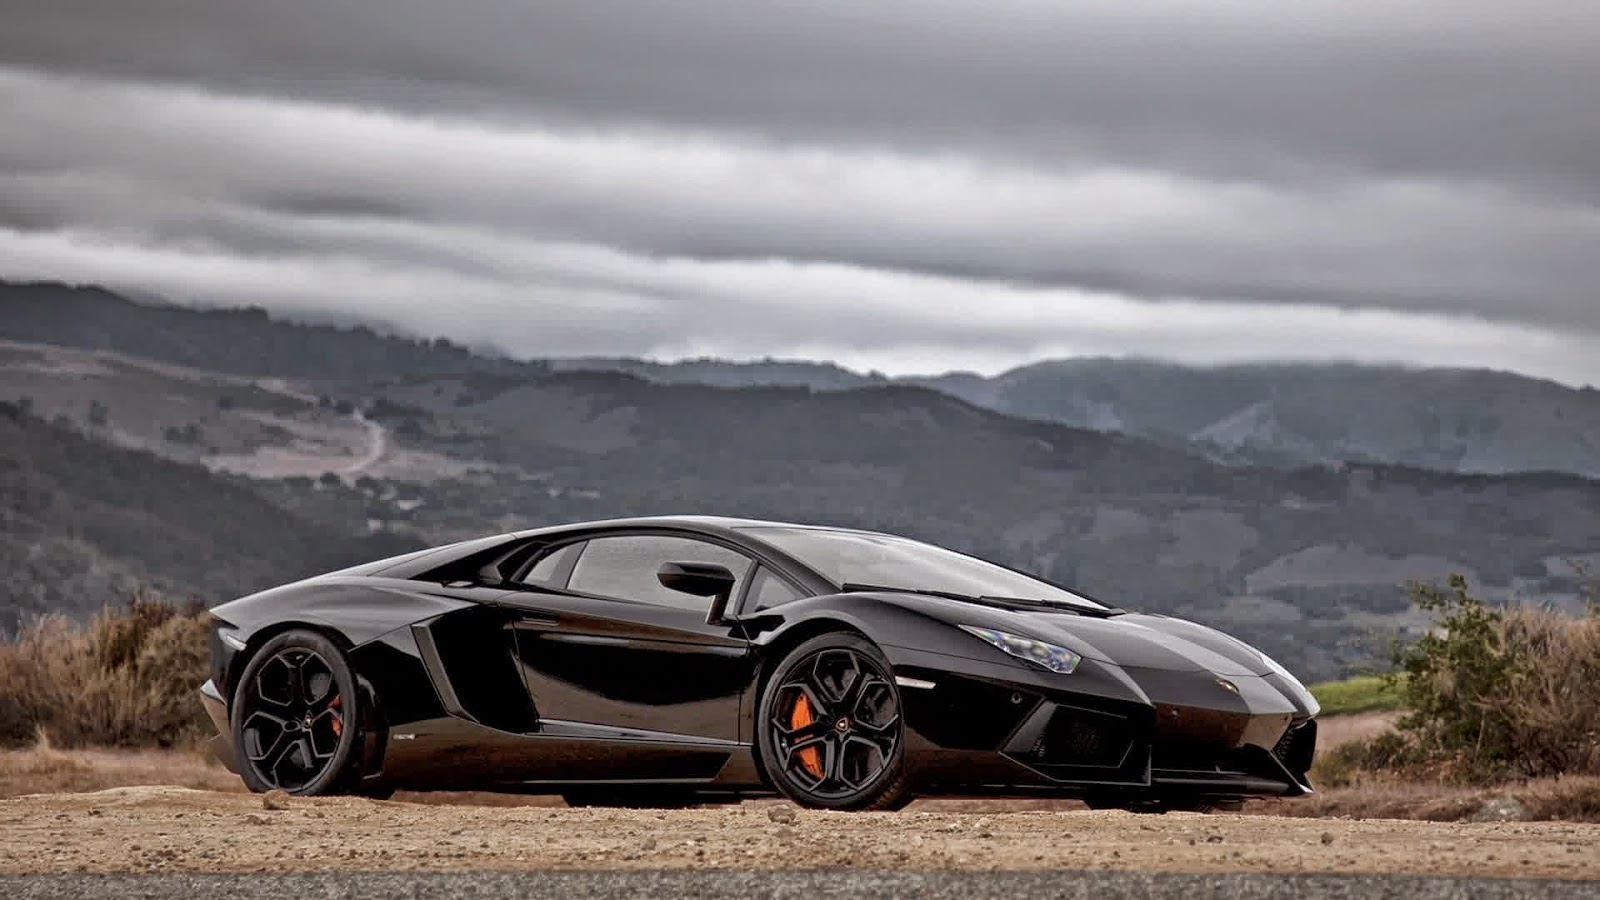 Black Lamborghini Aventador Wallpaper On The Mountain Mas Yadi